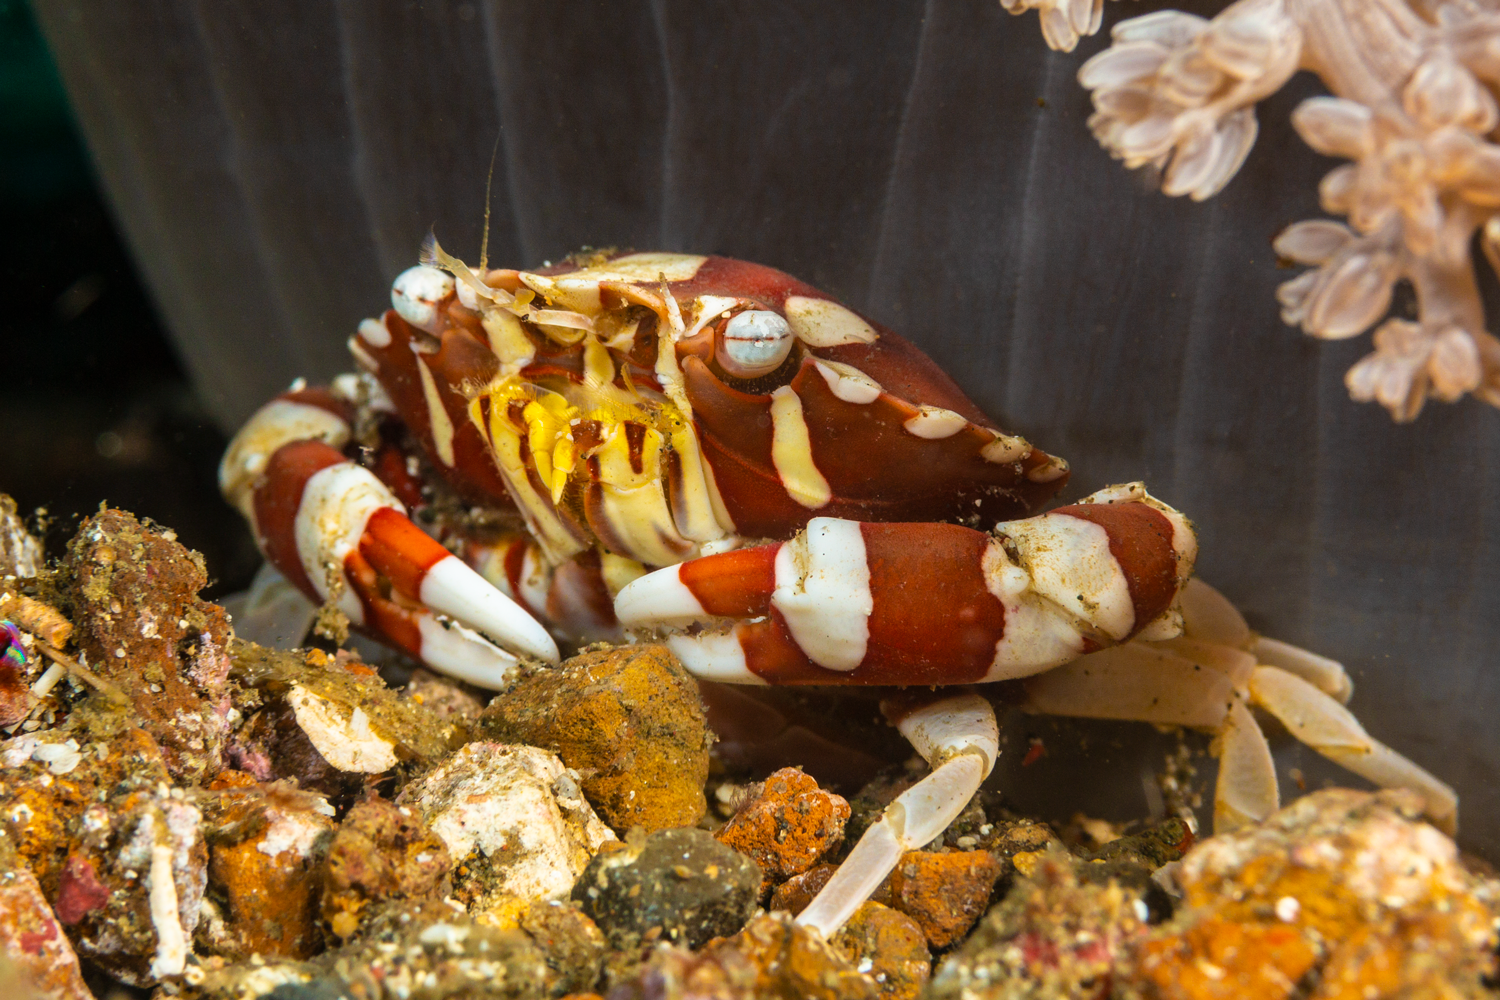 A harlequin crab captured underwater in Lembeh, Indonesia